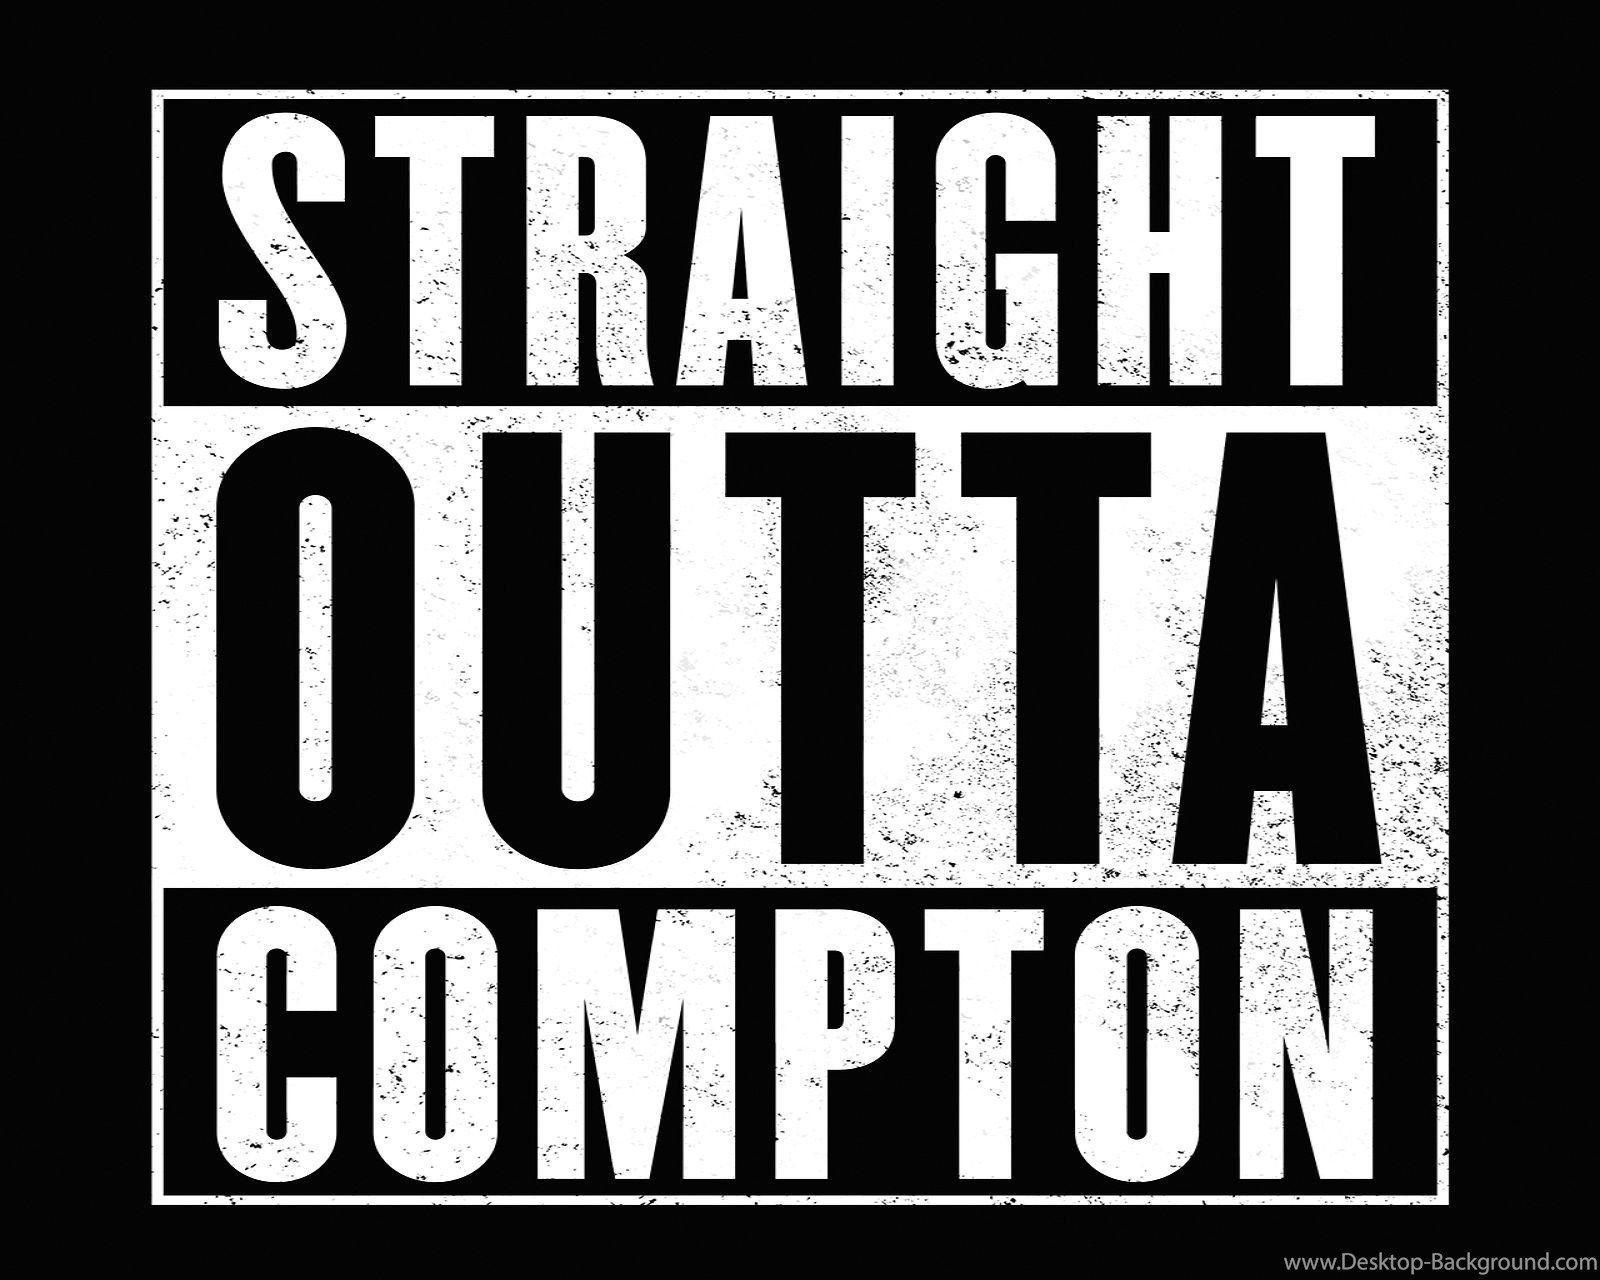 STRAIGHT OUTTA COMPTON rap rapper hip hop gangsta nwa biography drama music  1soc poster wallpaper  3158x5000  789293  WallpaperUP